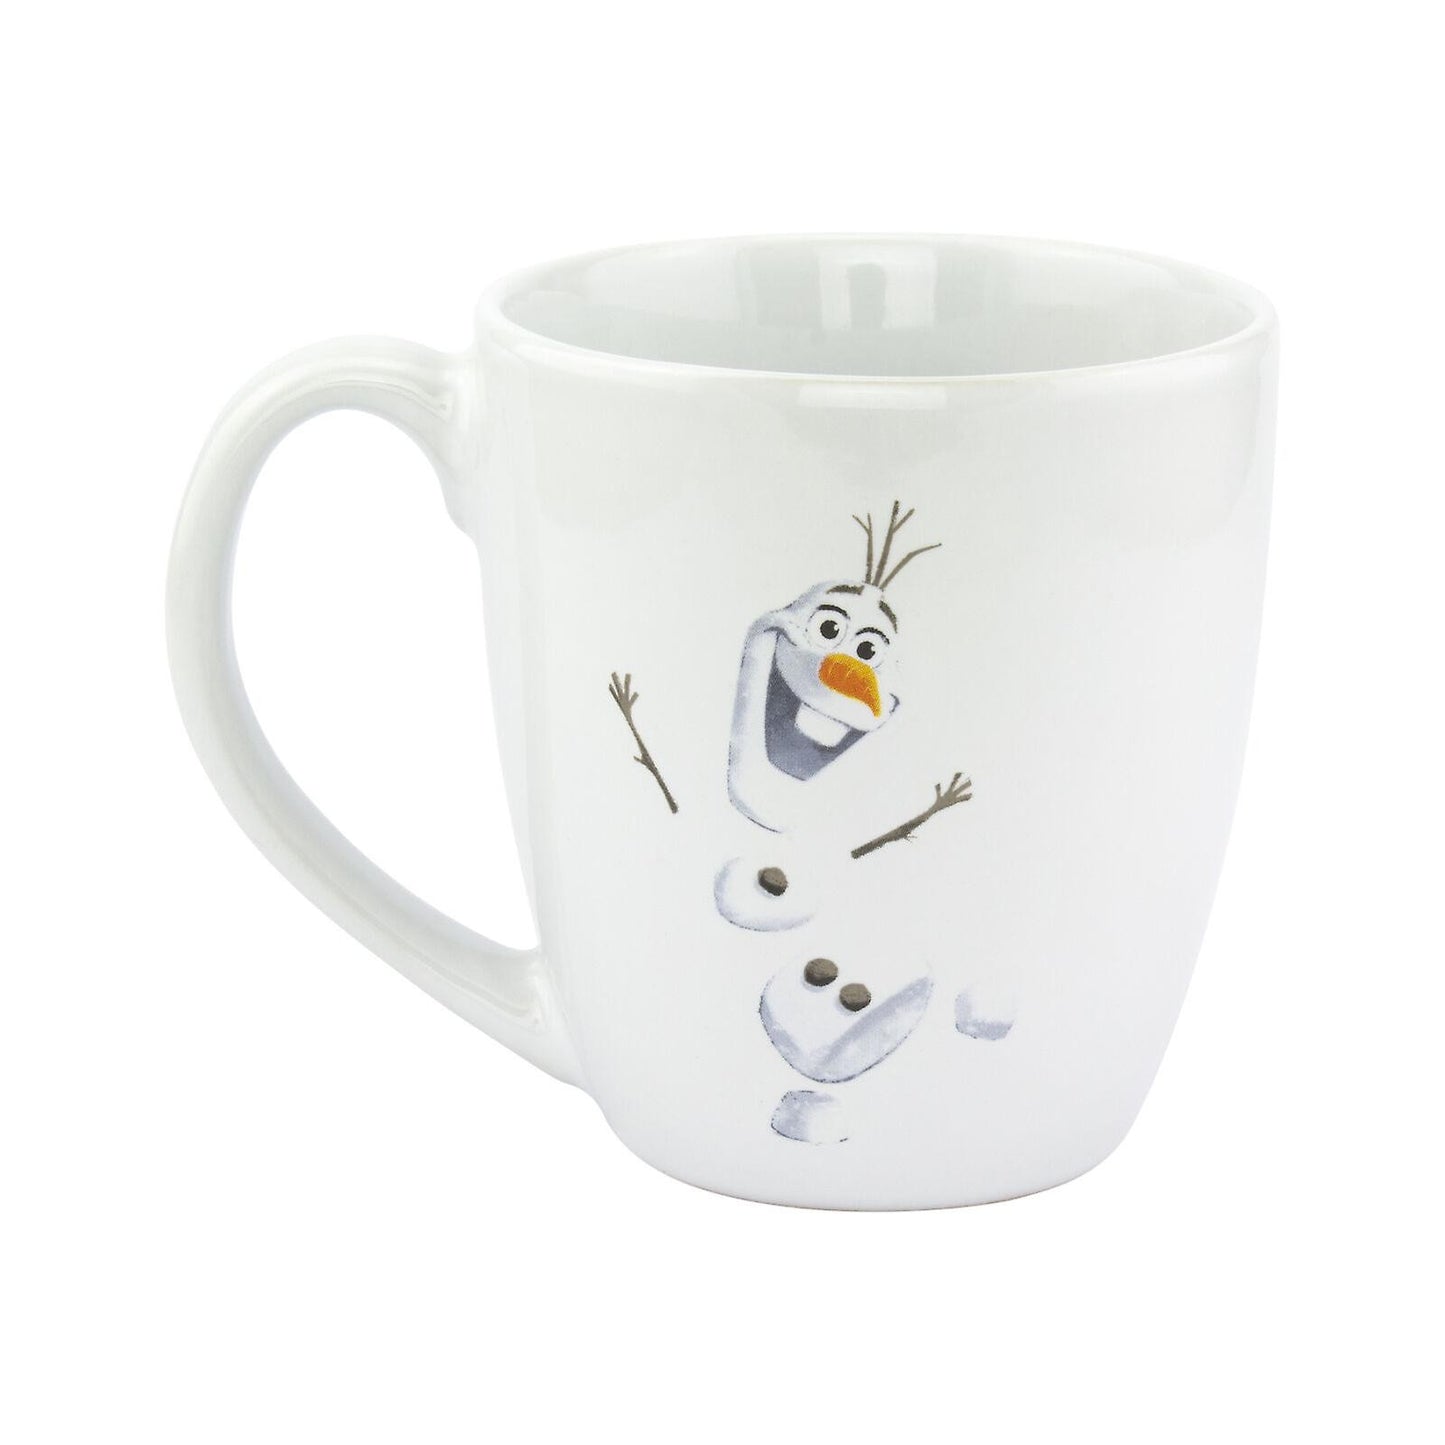 Disney Frozen mug - Olaf cozy Mug